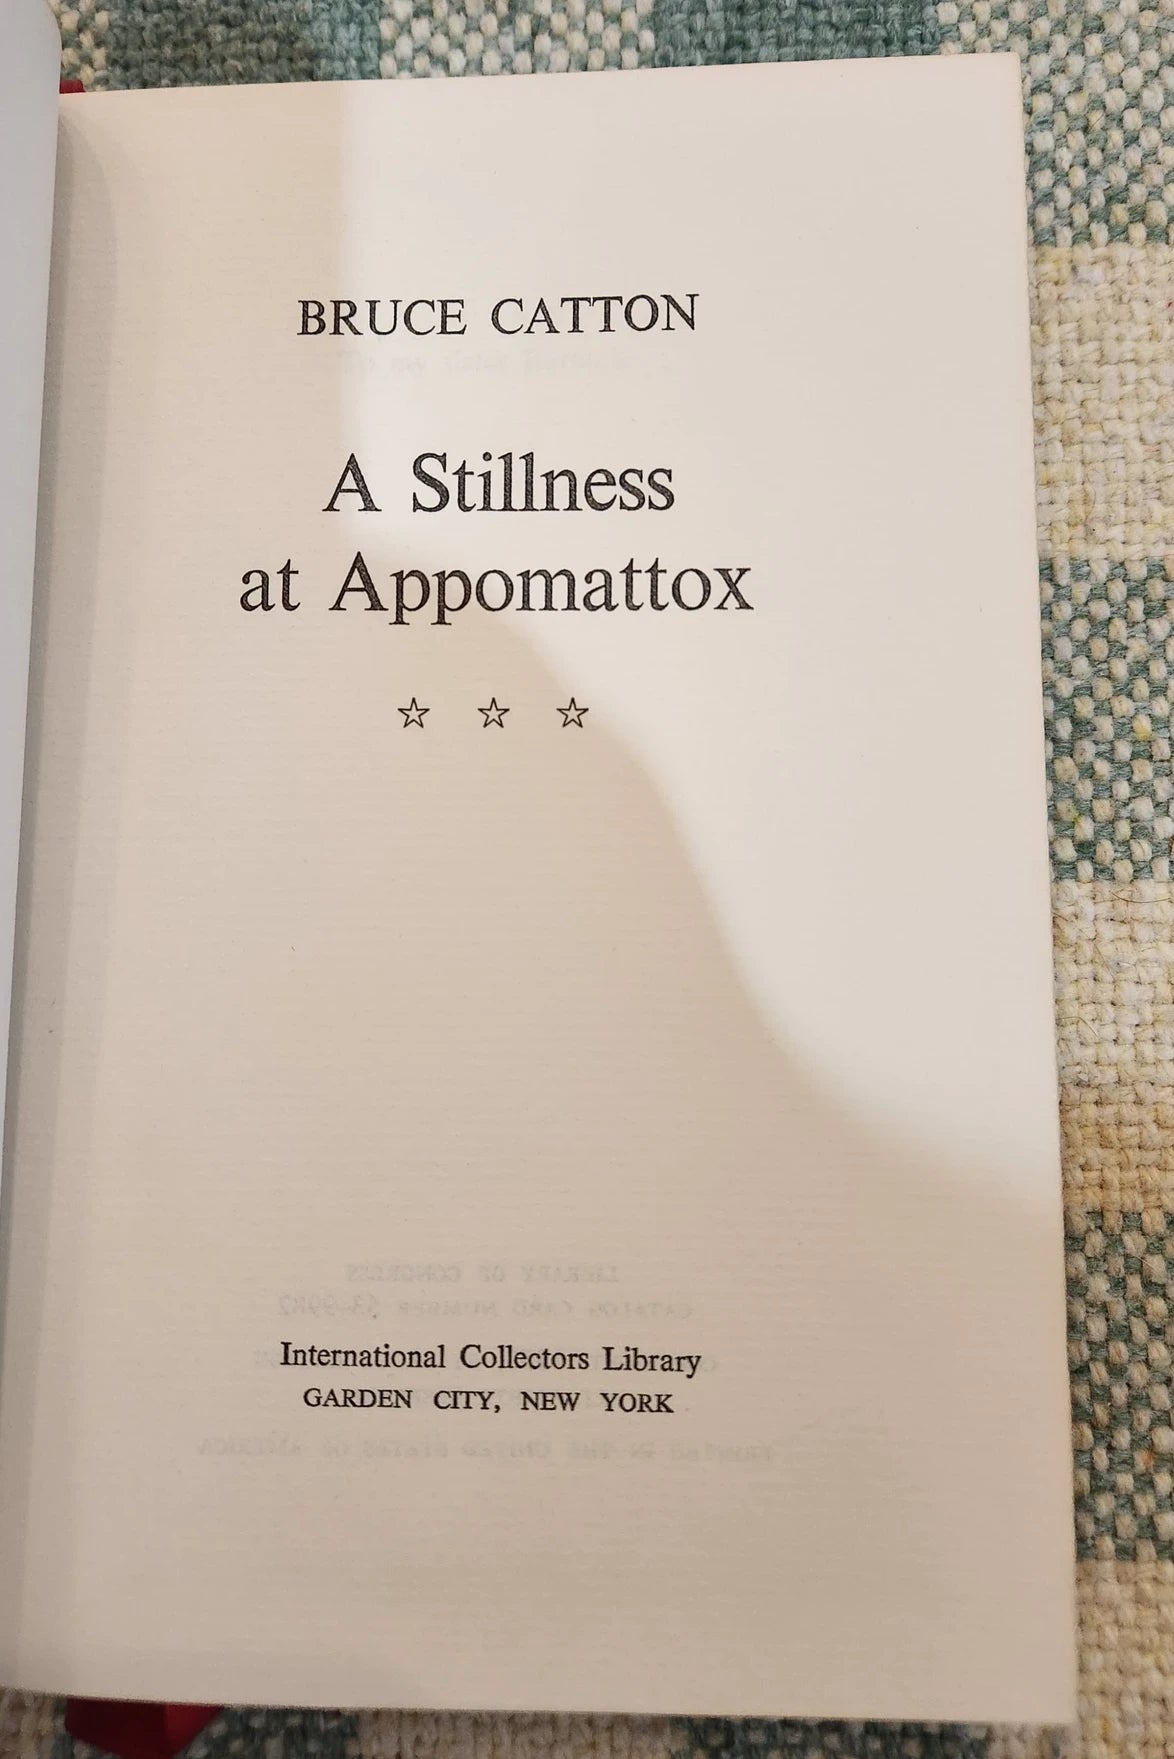 A Stillness at Appomattox by Bruce Catton~ International Collectors Library - Dead Tree Dreams Bookstore